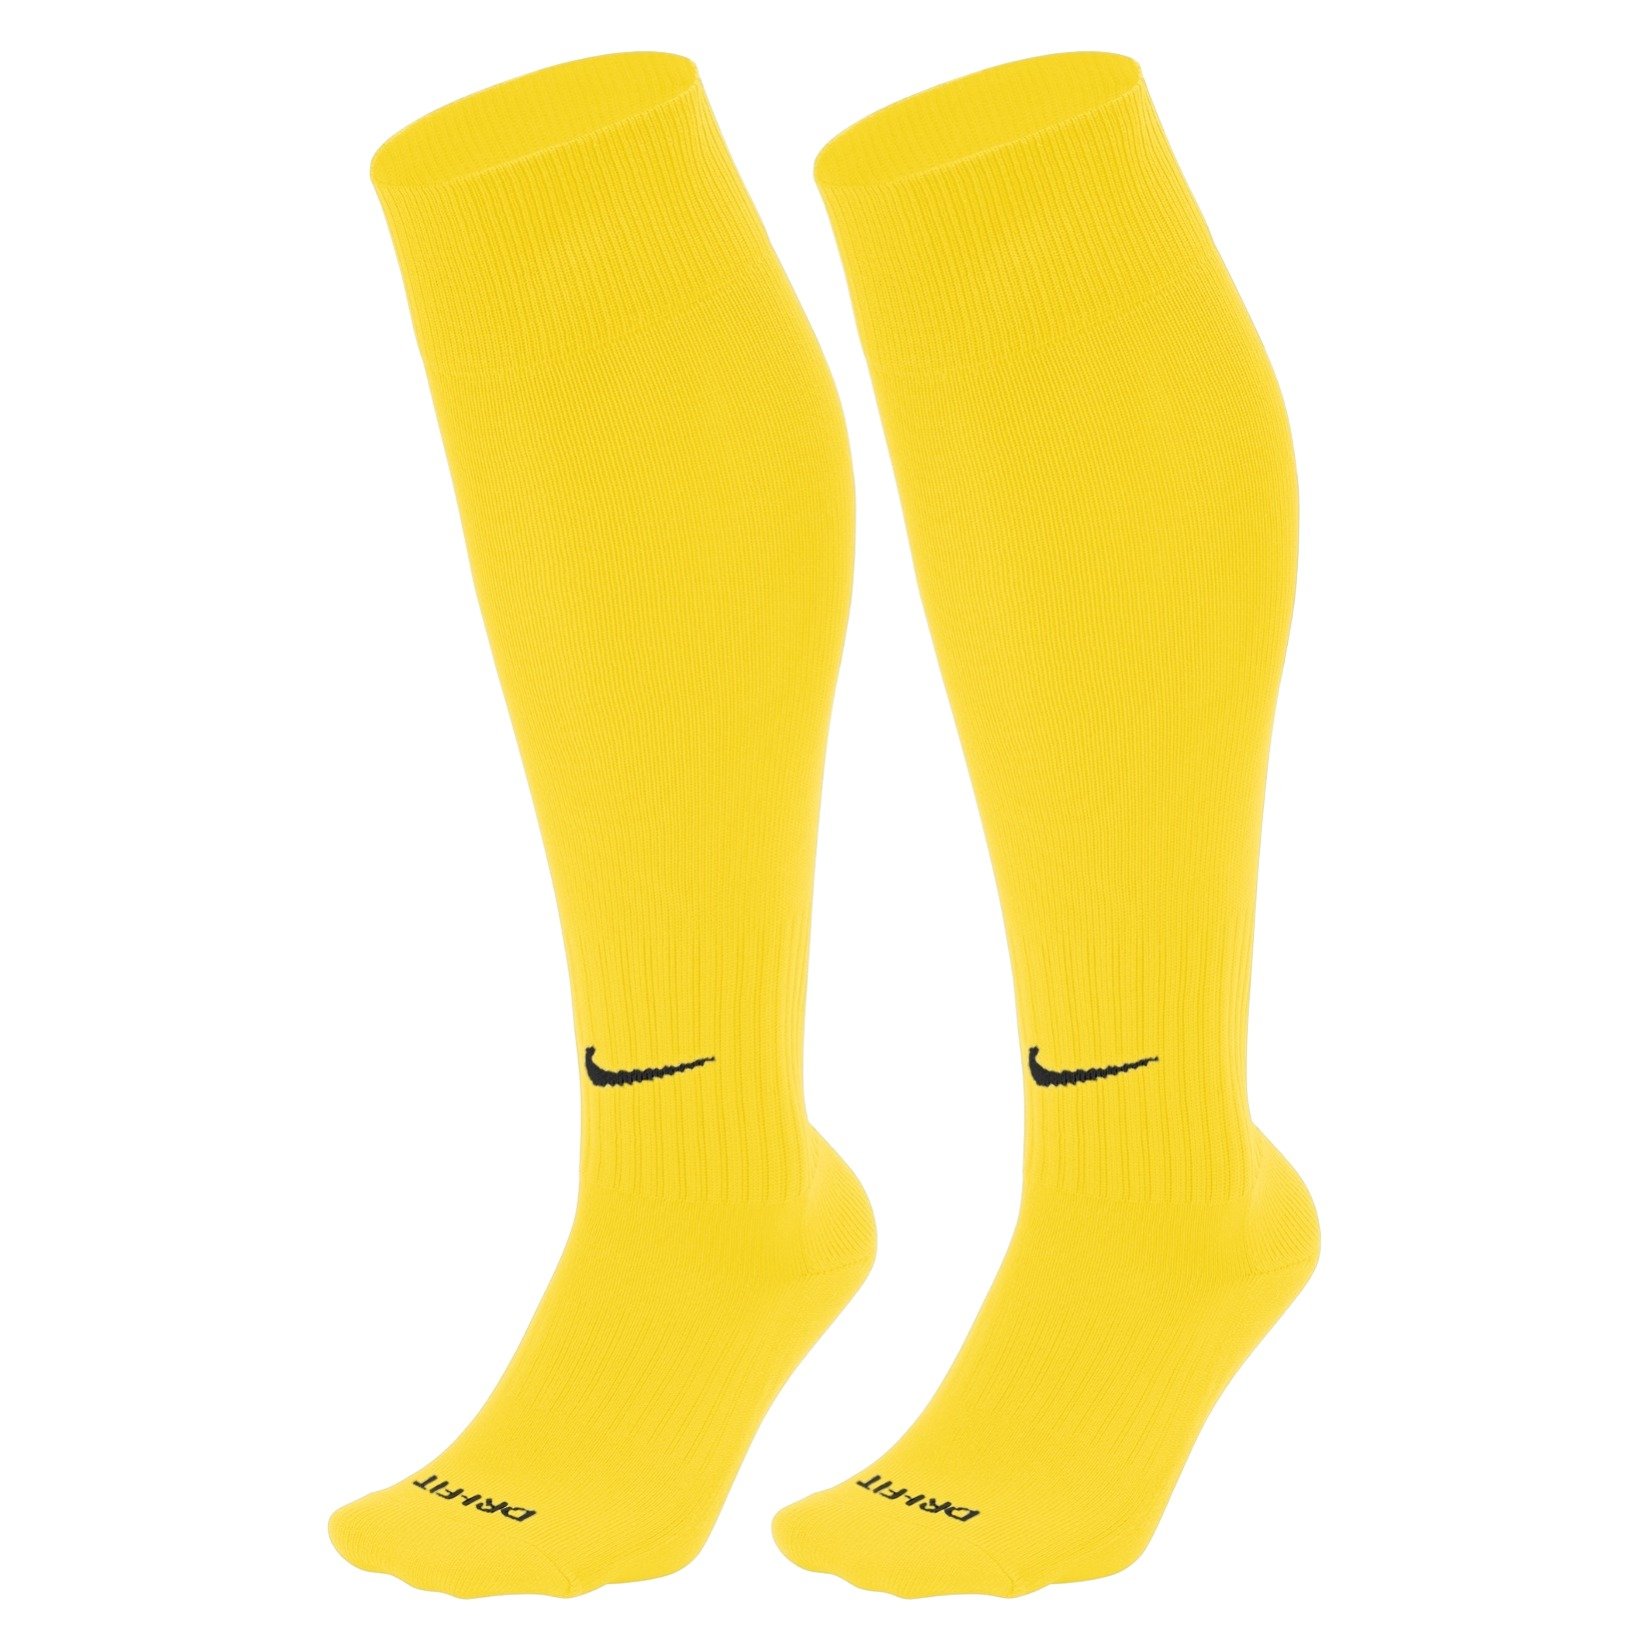 Nike CLASSIC II SOCKS Tour Yellow-Black